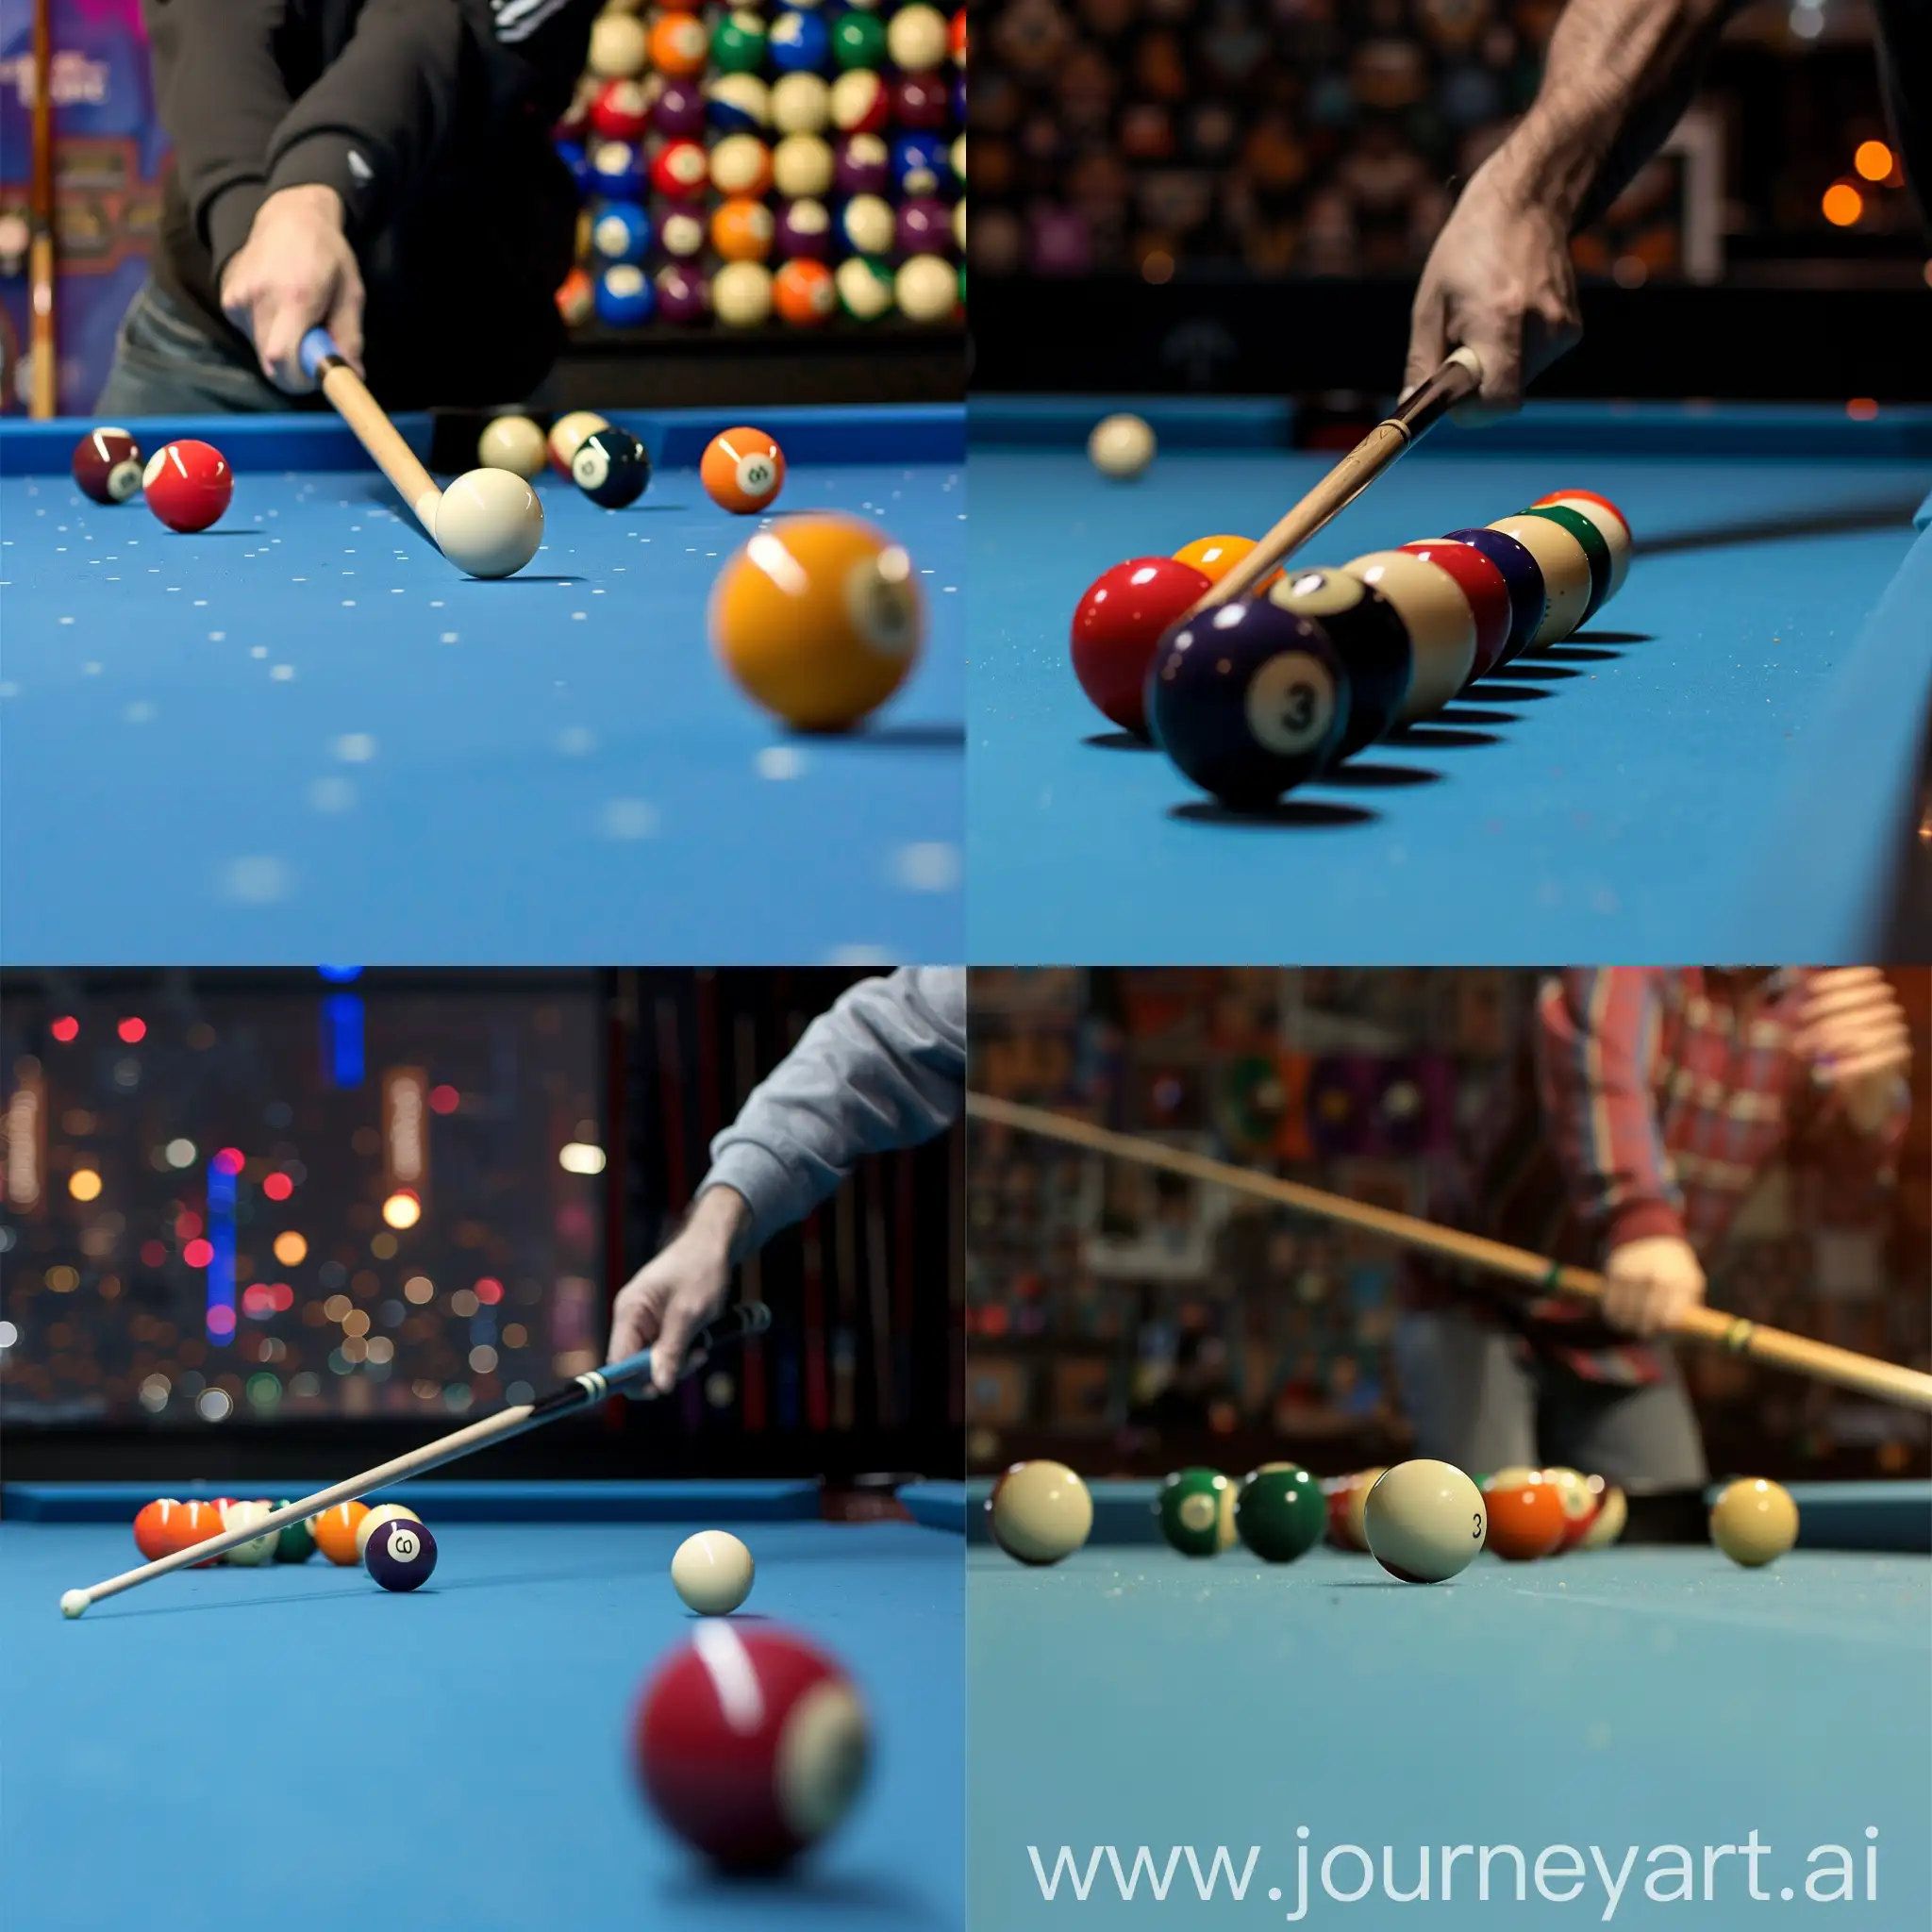 Billiards-Player-Striking-Ball